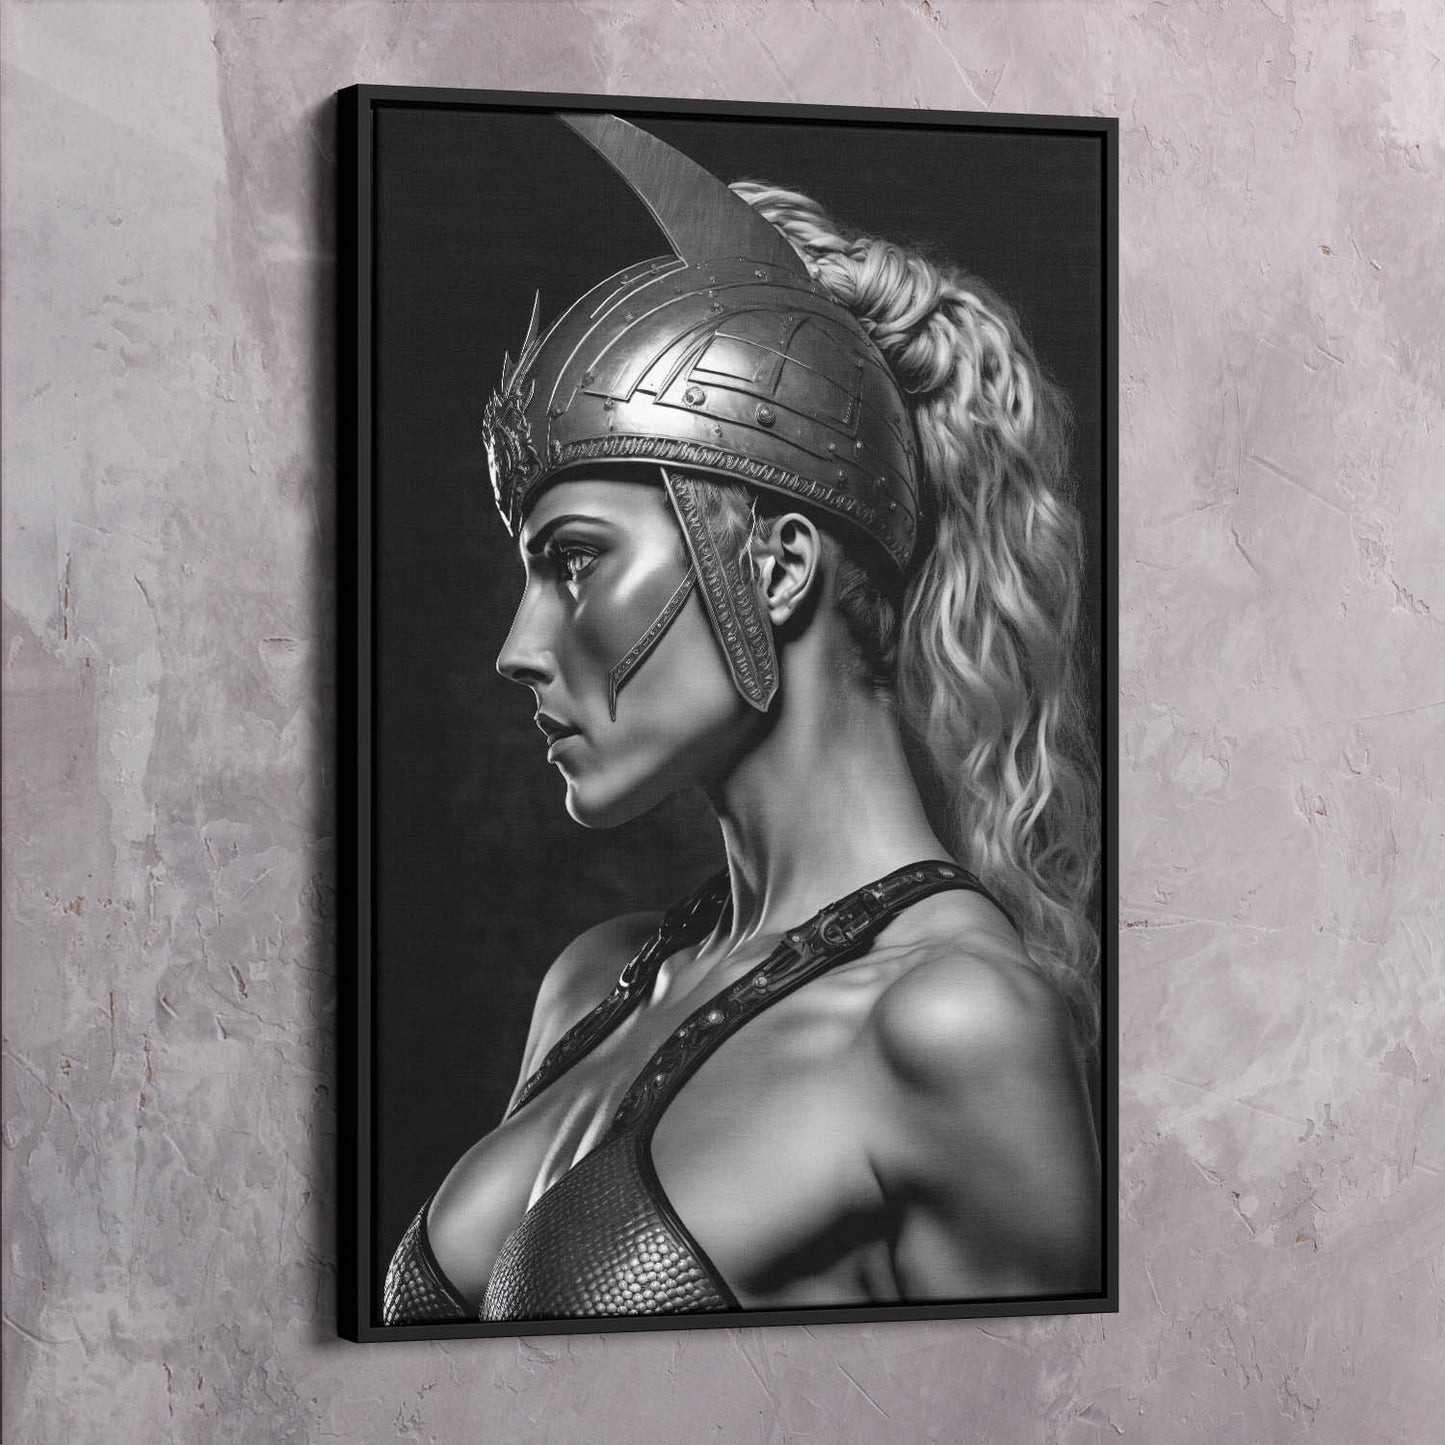 Female Warrior - You’ll Never Win Your War Quote Wall Art | Inspirational Wall Art Motivational Wall Art Quotes Office Art | ImpaktMaker Exclusive Canvas Art Portrait